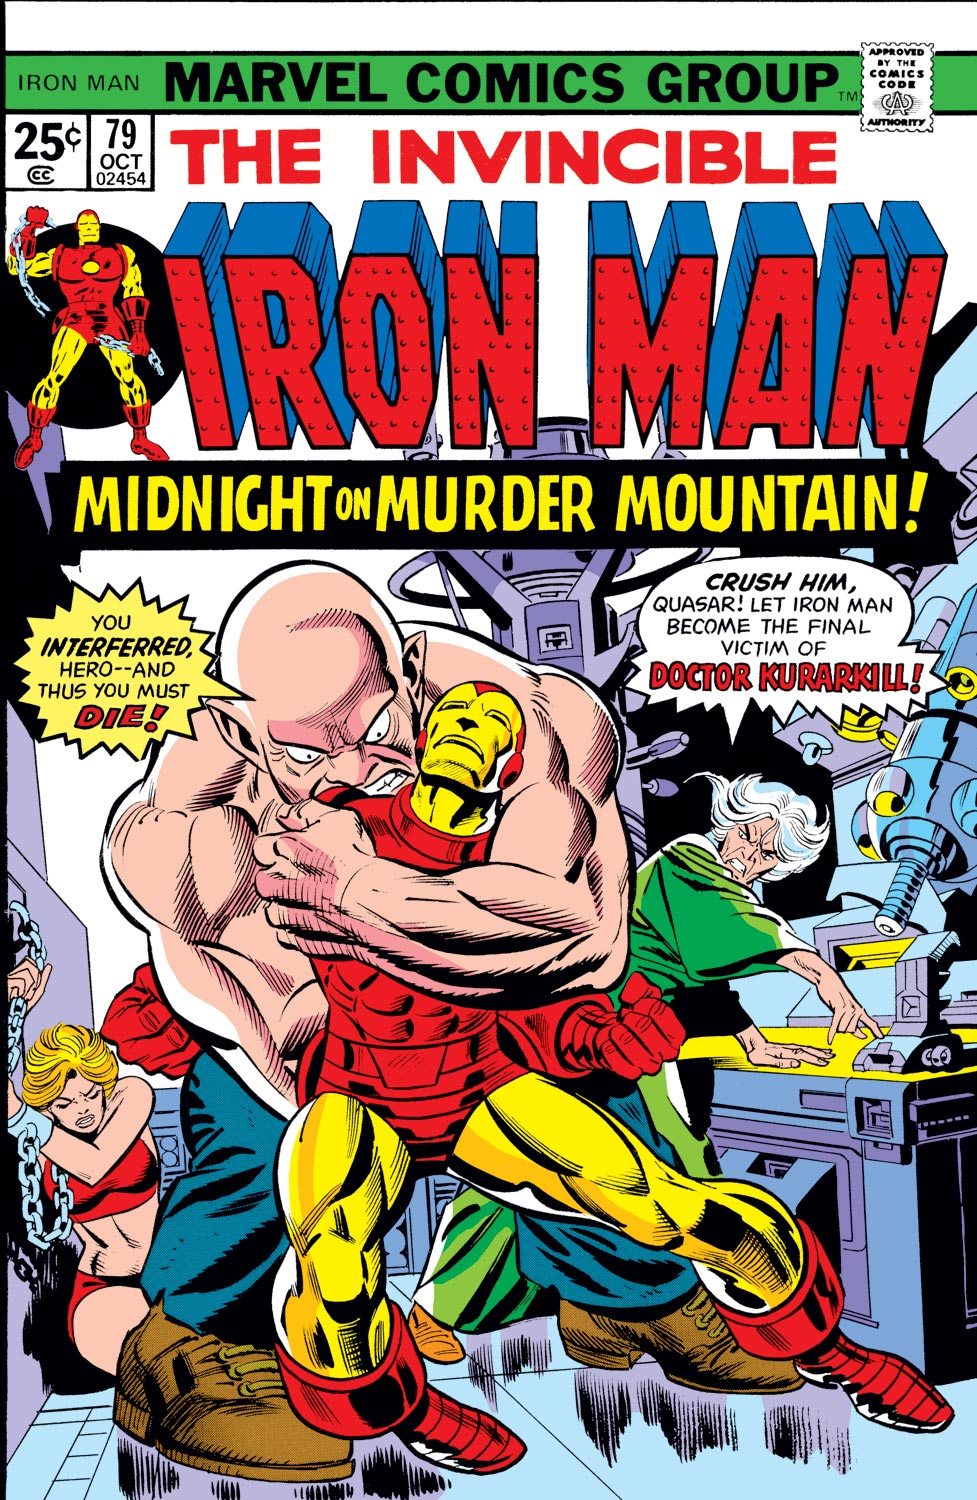 Iron Man (1968) #79